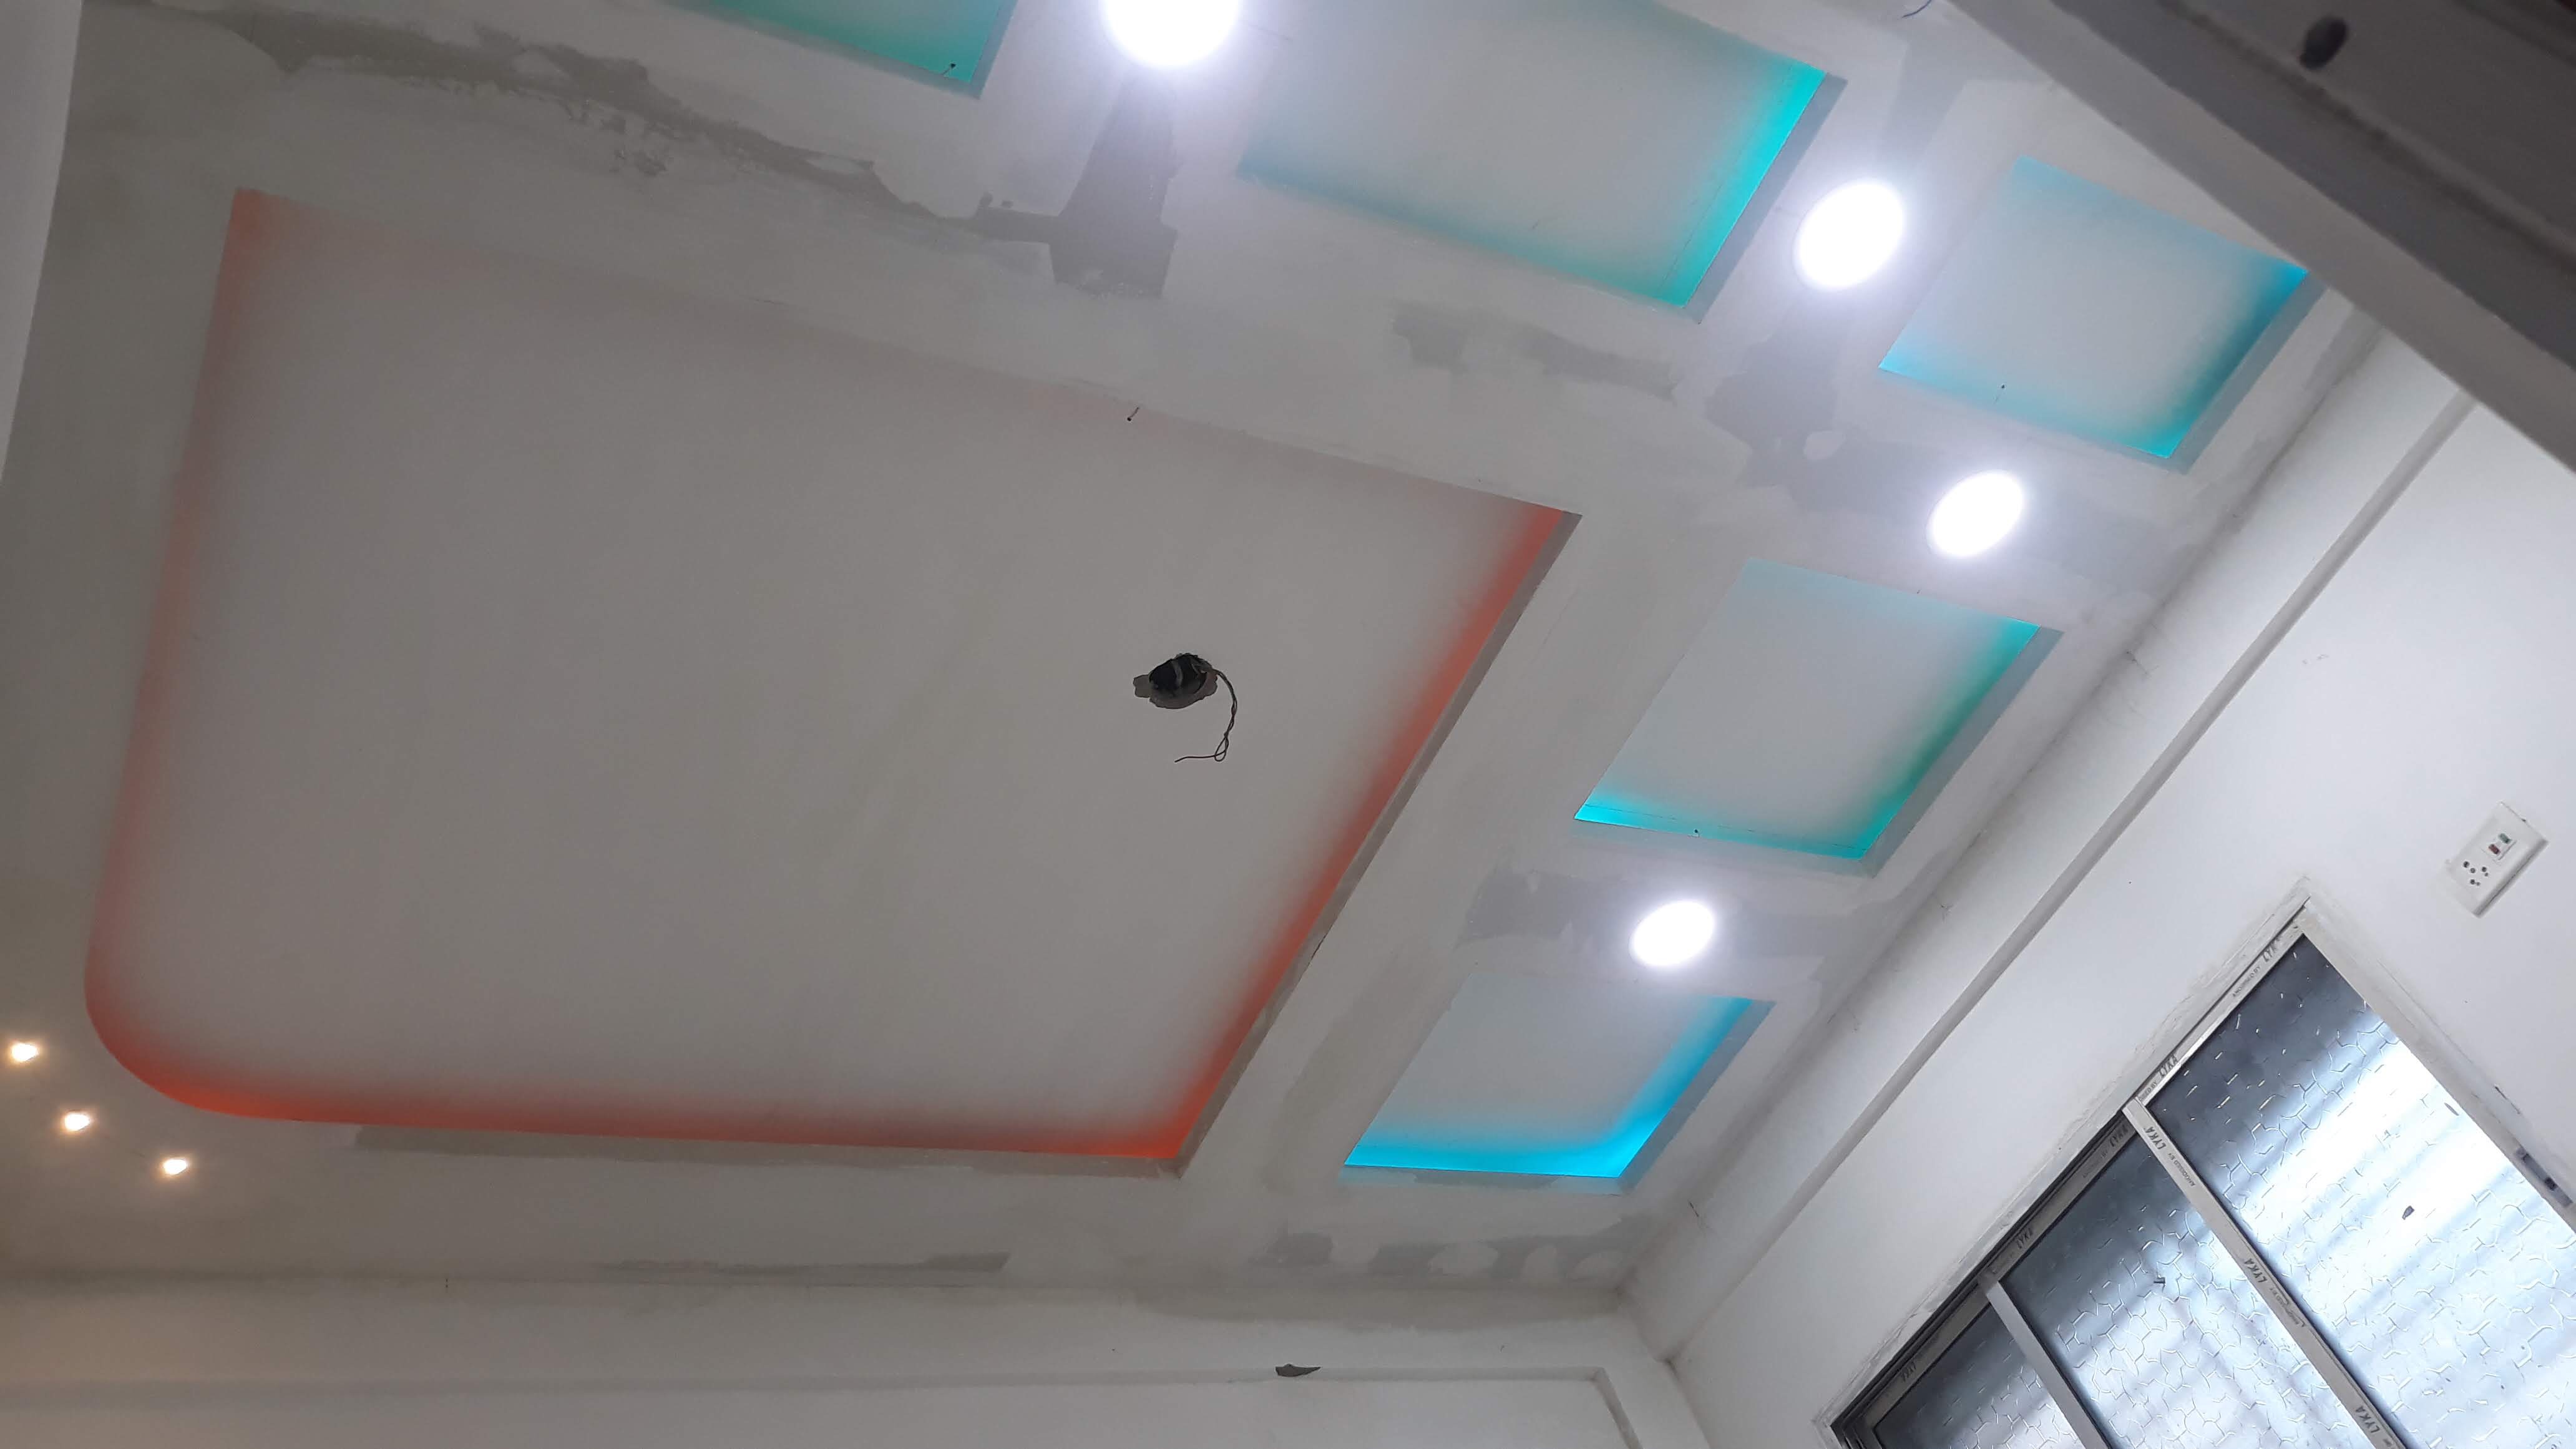 drywall gypsum bod false ceiling , false ceiling , roof ceiling design , gypsum bod false ceiling design , heat prove false ceiling design, 